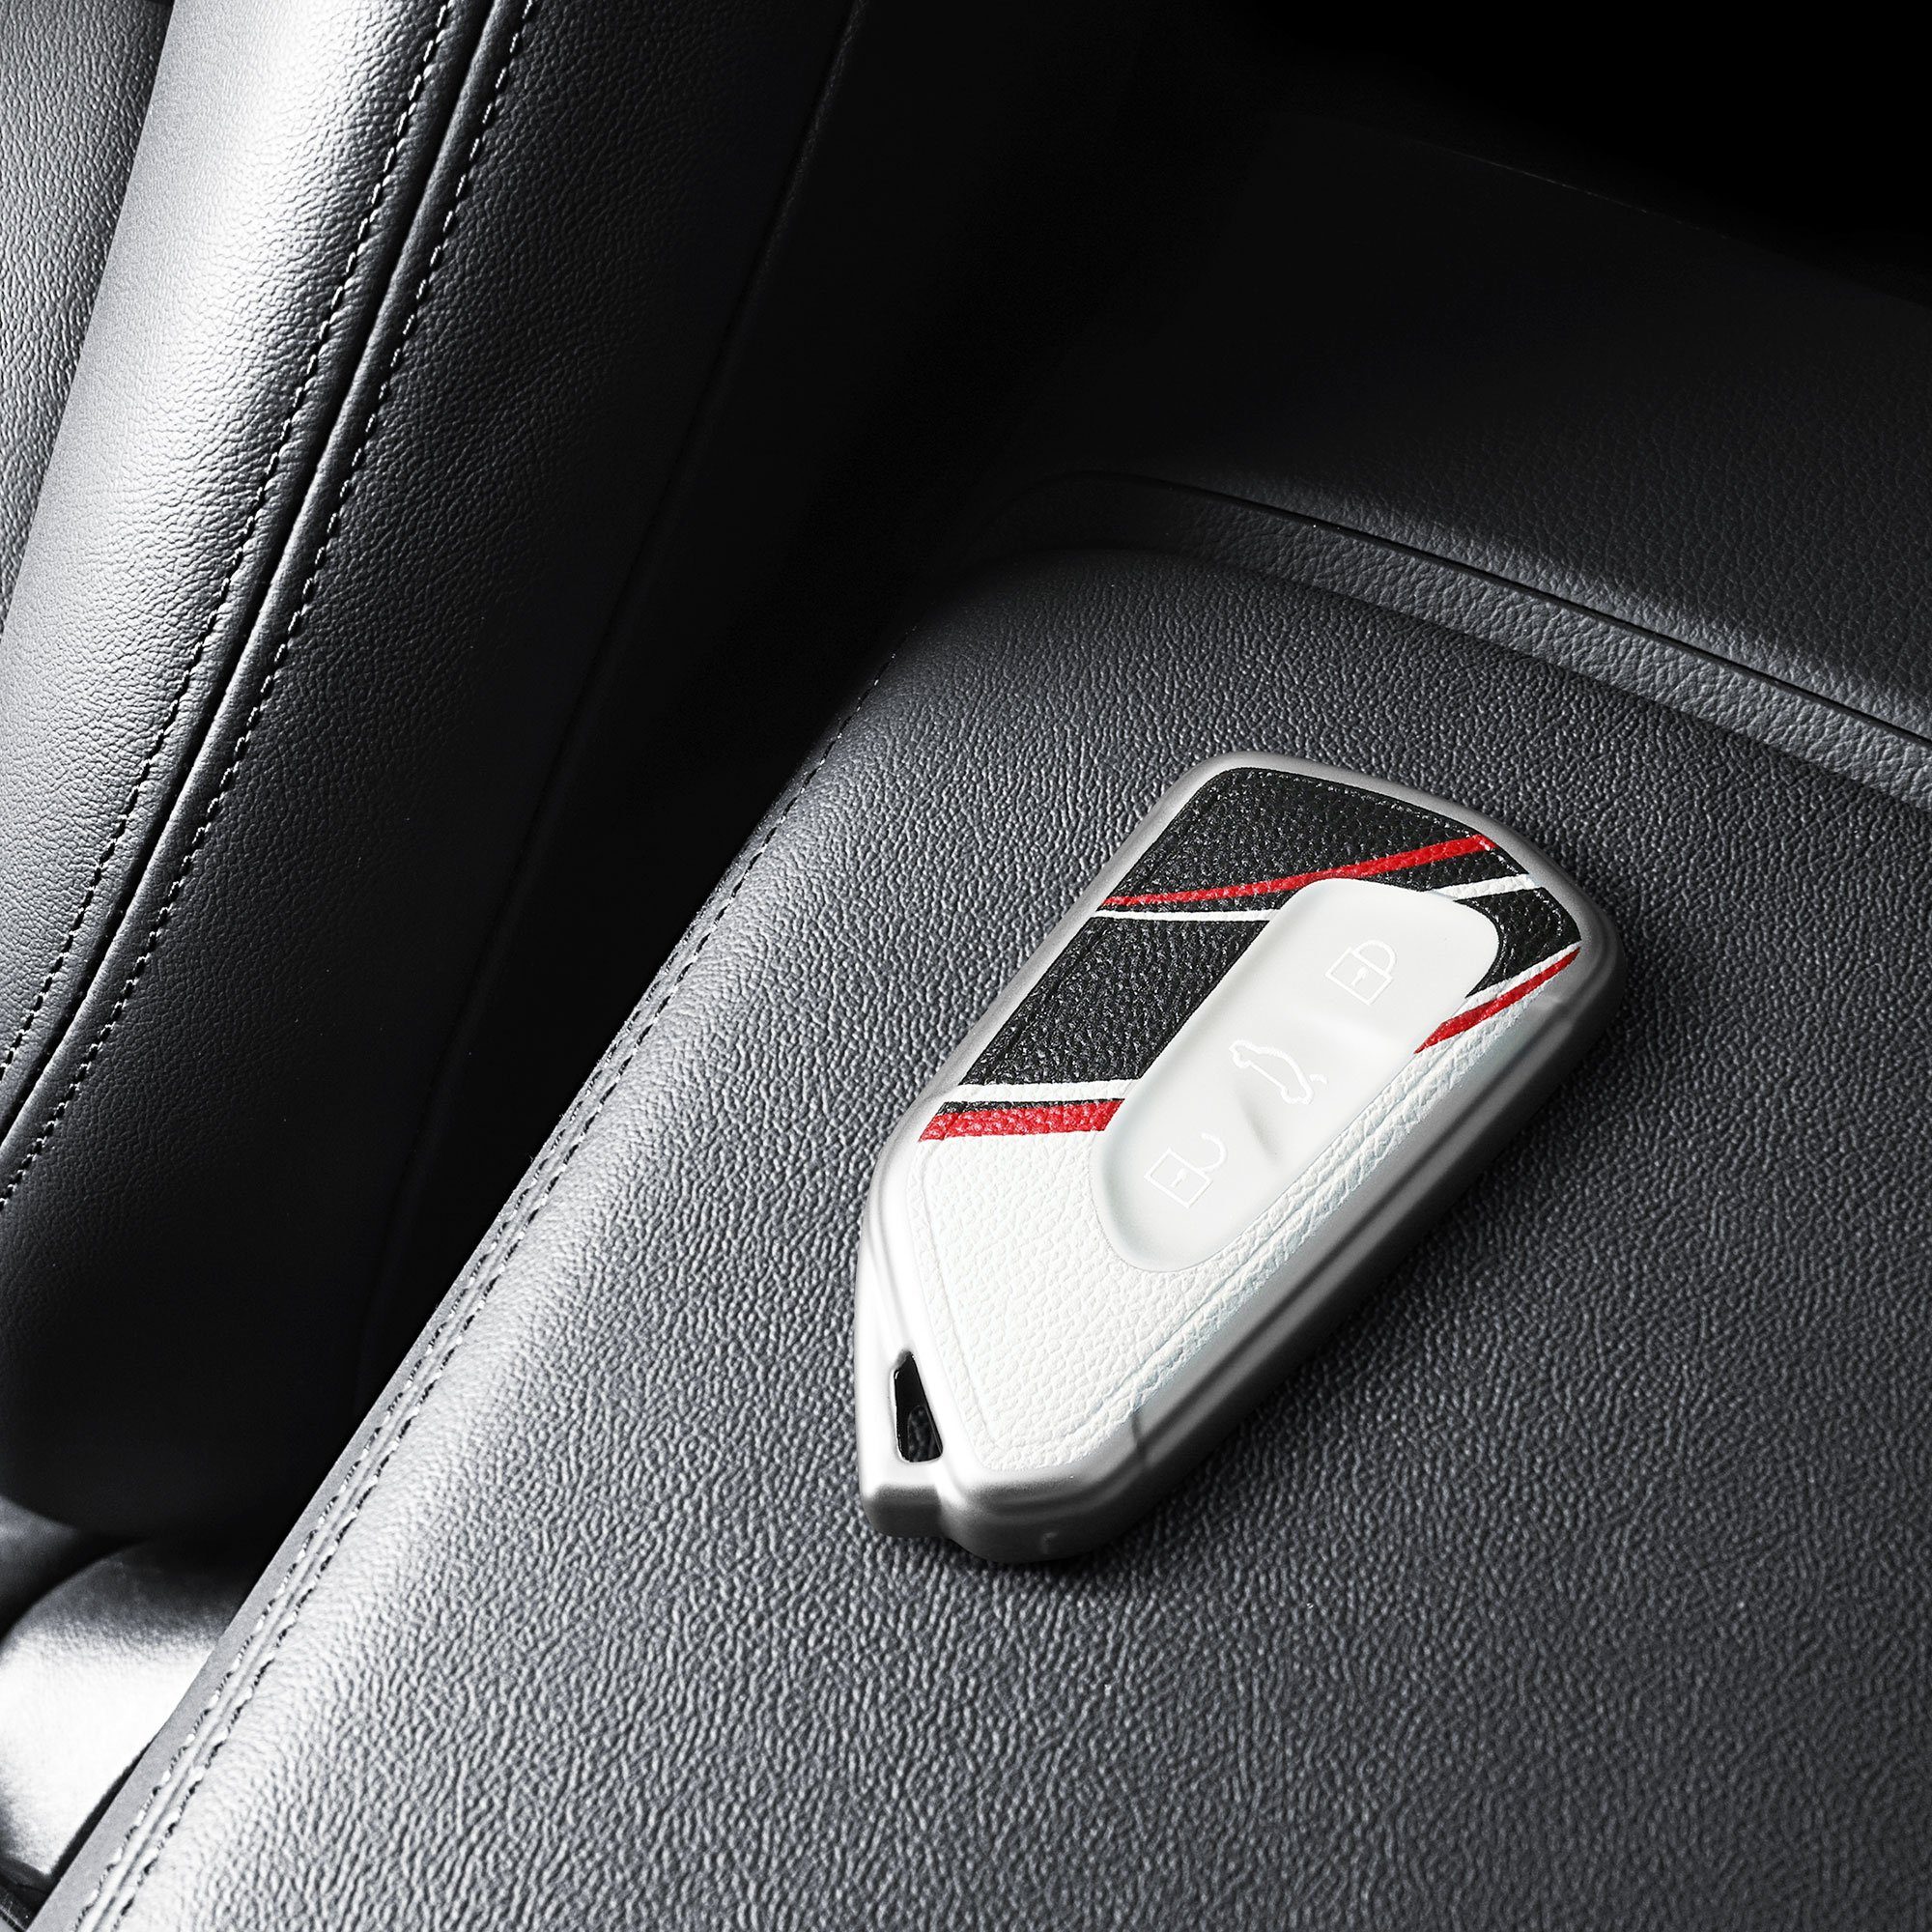 für Rot Schlüsseltasche Cover Schutzhülle TPU kwmobile Autoschlüssel Schlüsselhülle VW 8, Golf Hülle